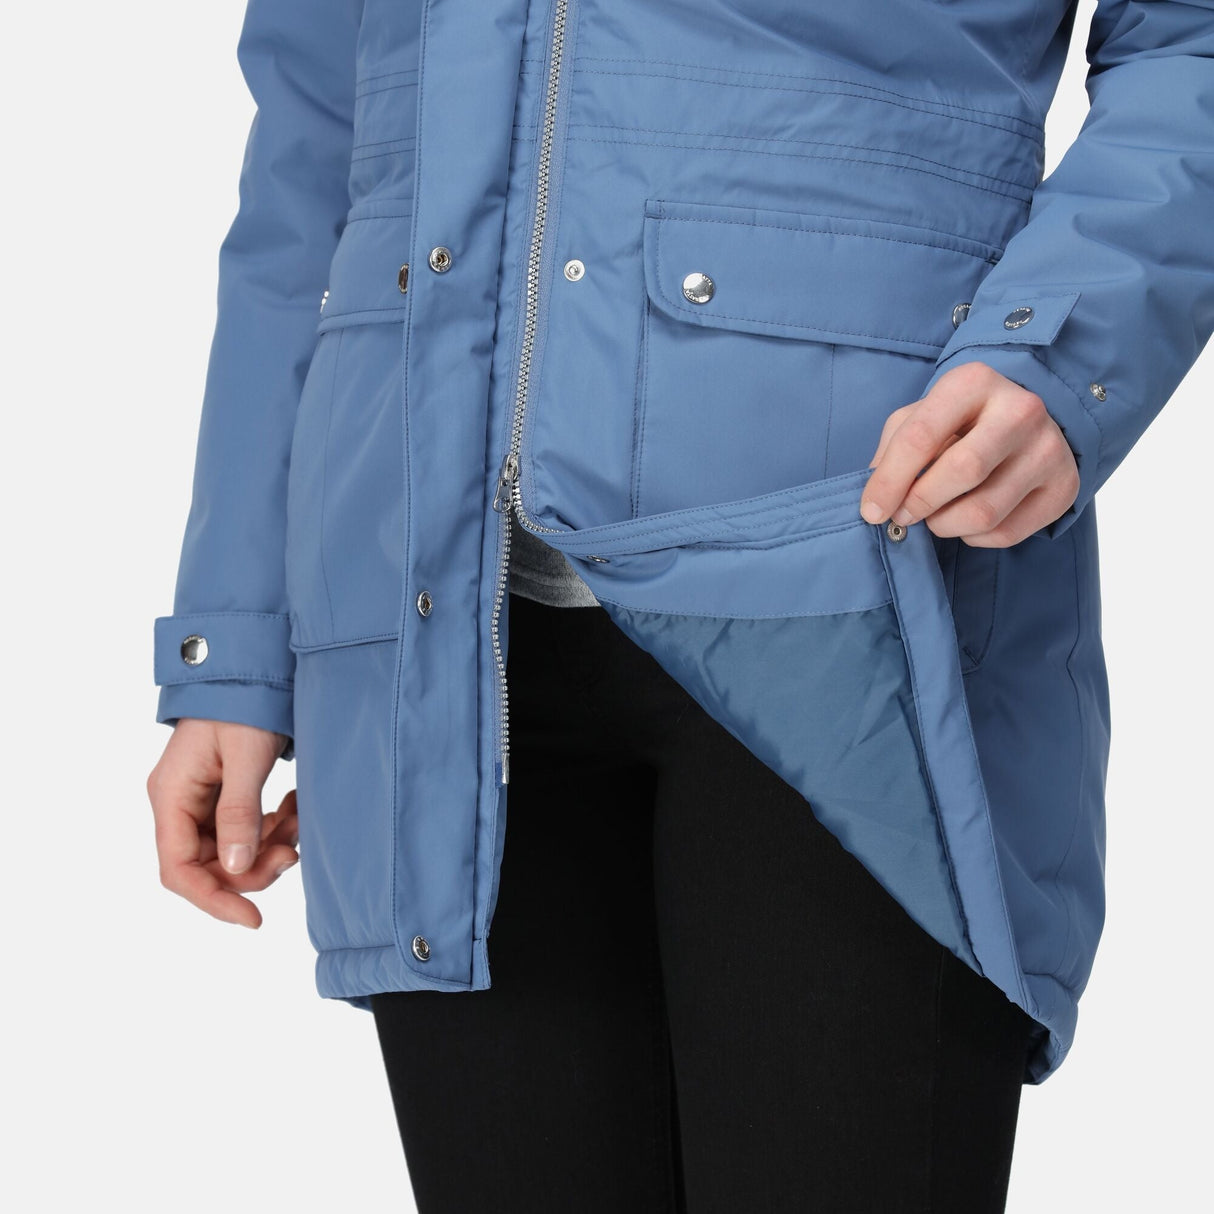 Regatta Women's Voltera Waterproof Heated Jacket - Premium clothing from Regatta - Just $54.99! Shop now at Warwickshire Clothing